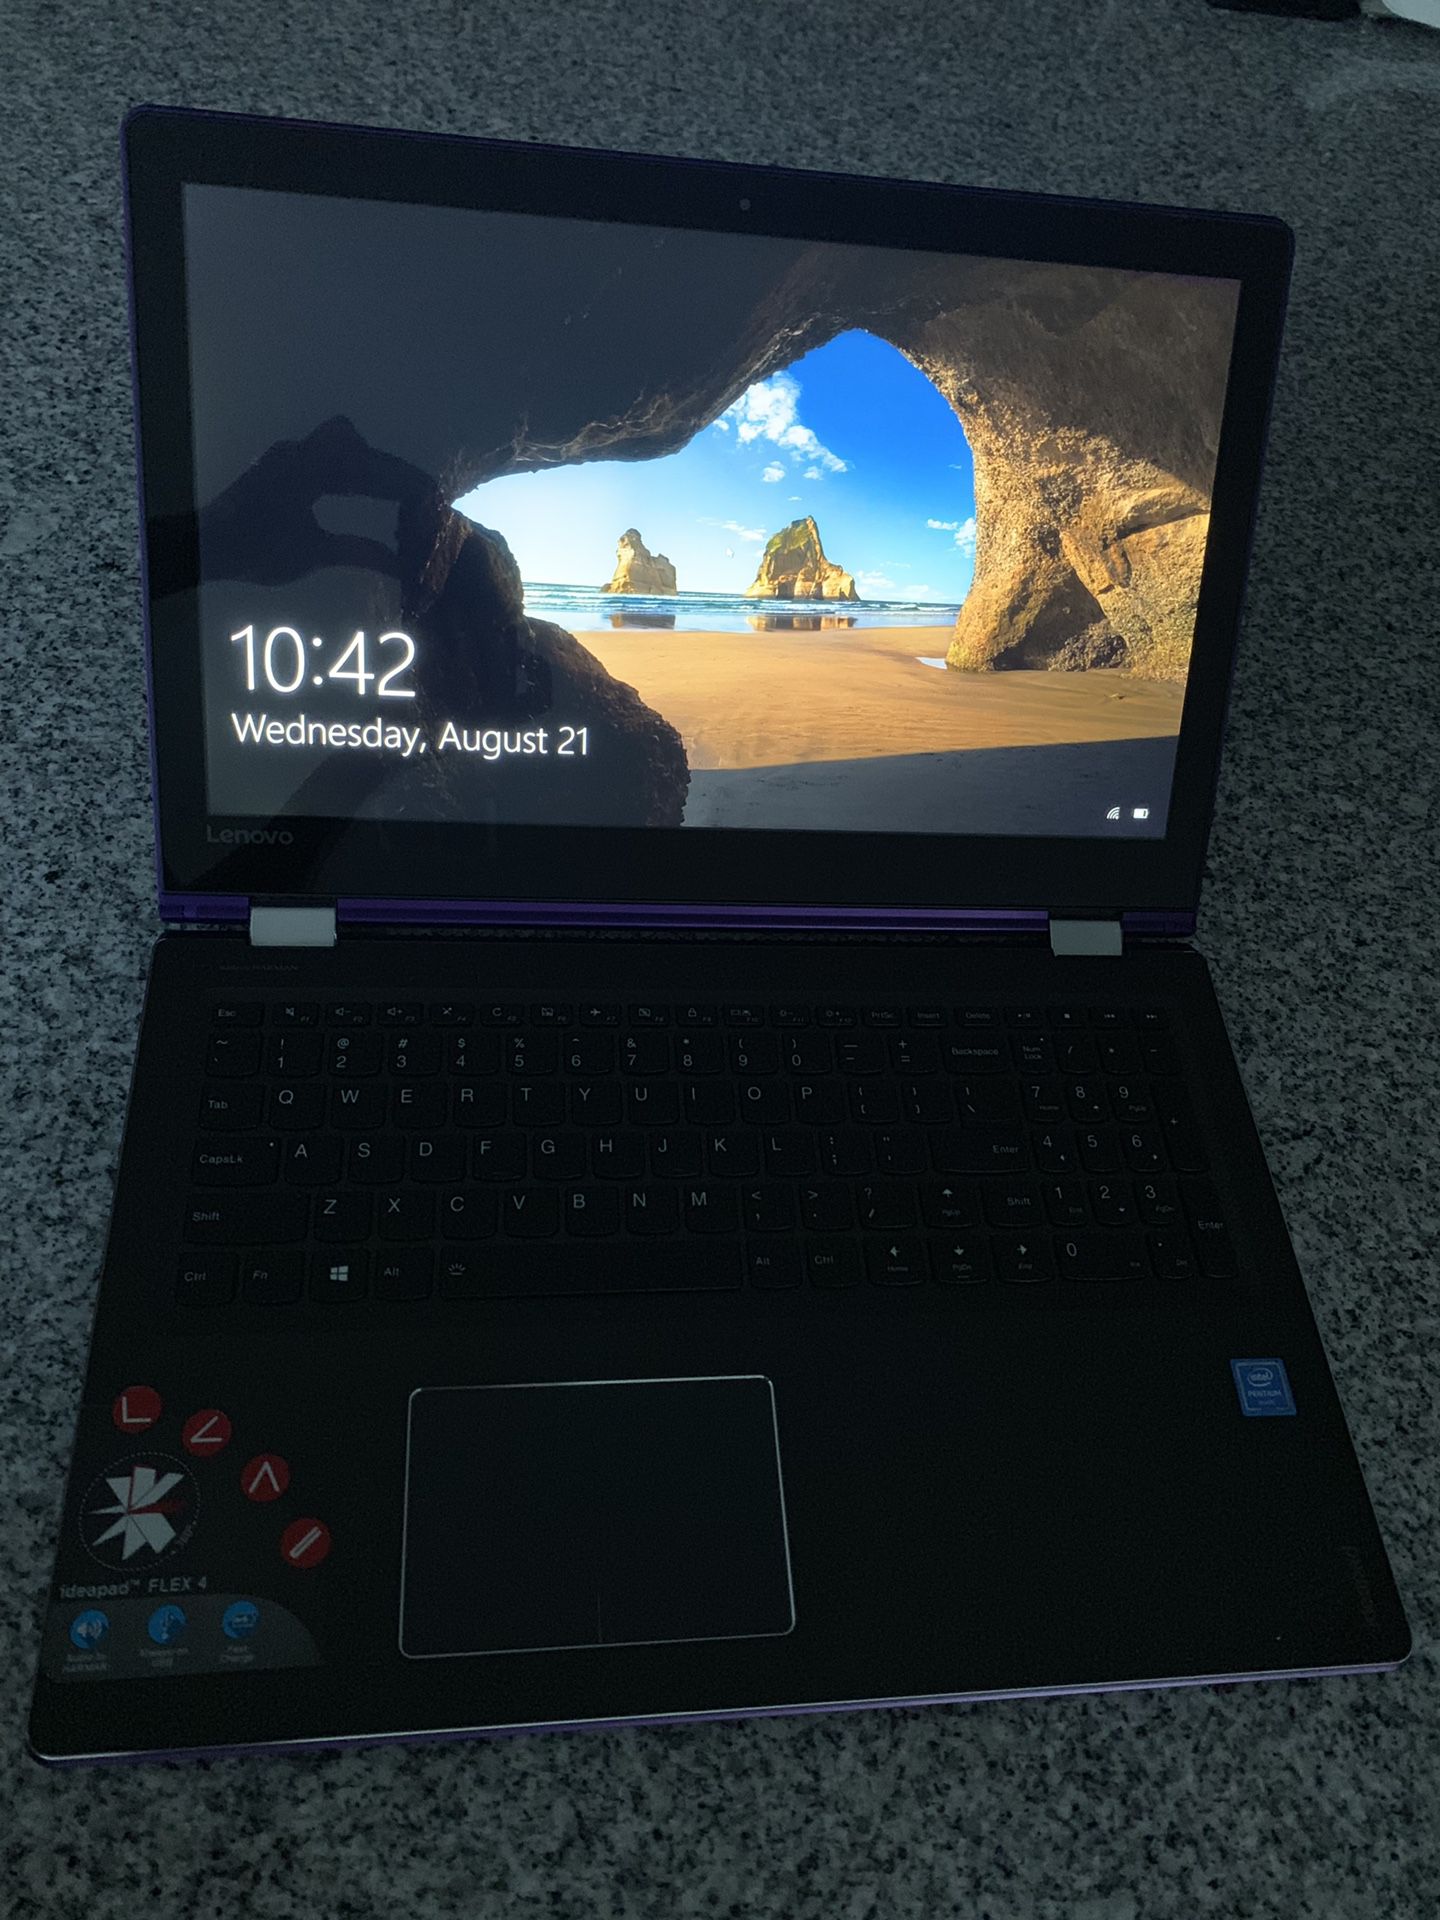 Lenovo Ideapad Flex 4-1570 (Laptop/Tablet)